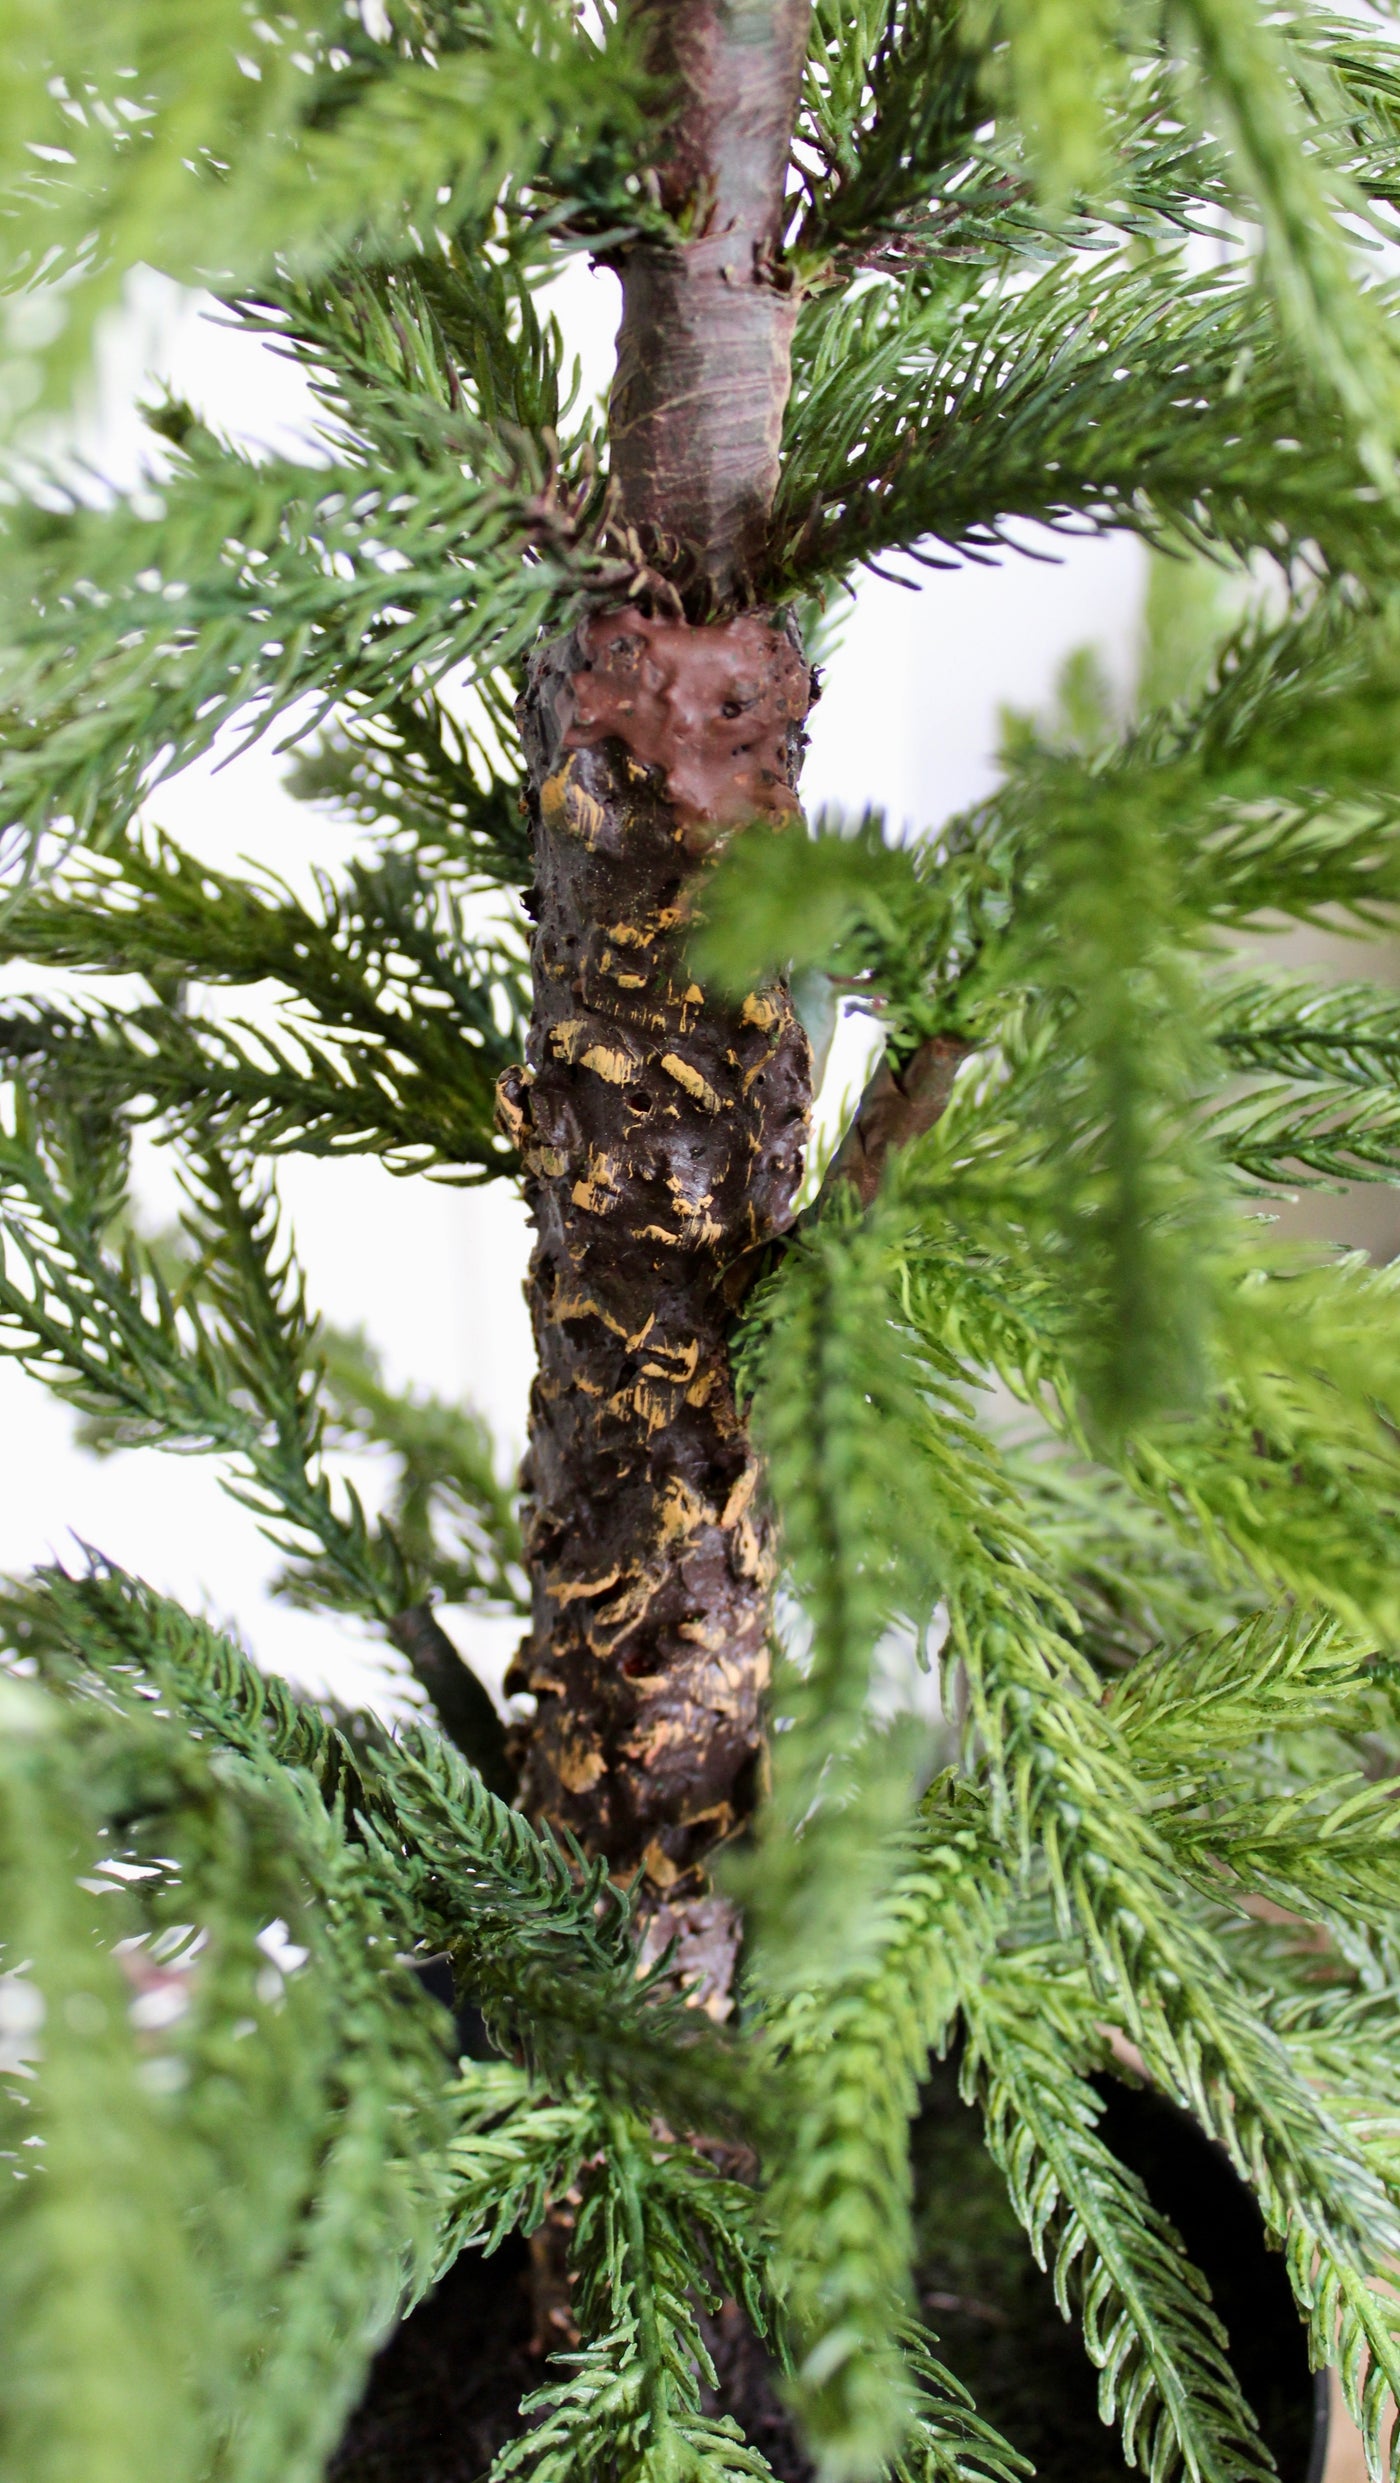 28” Fresh Touch Norfolk Pine Tree